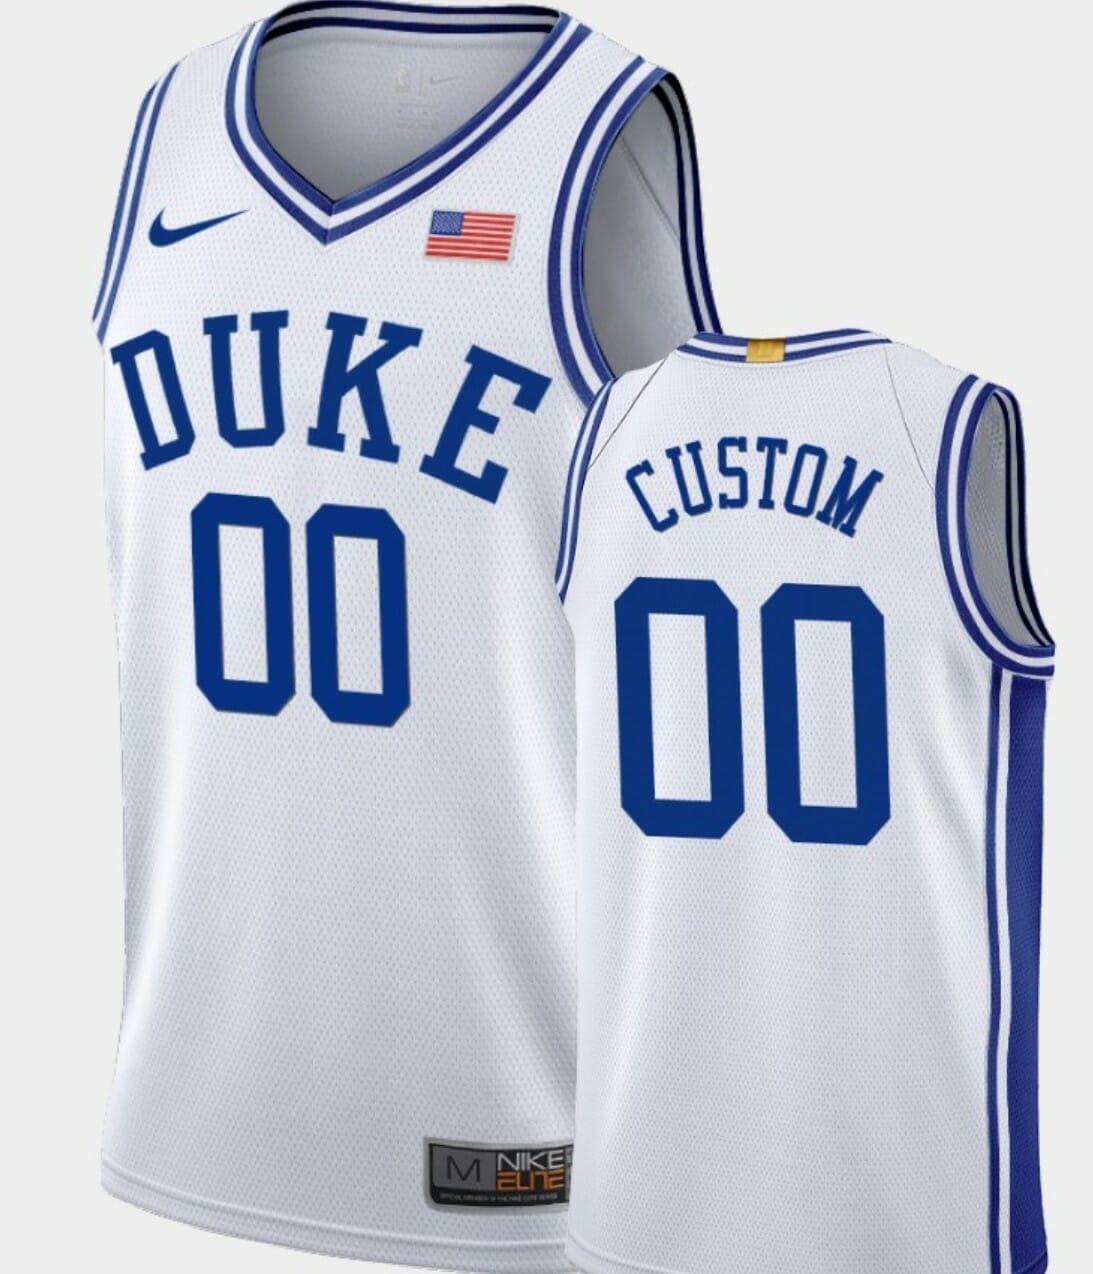 Duke Basketball: Best player ever to wear every Blue Devil jersey